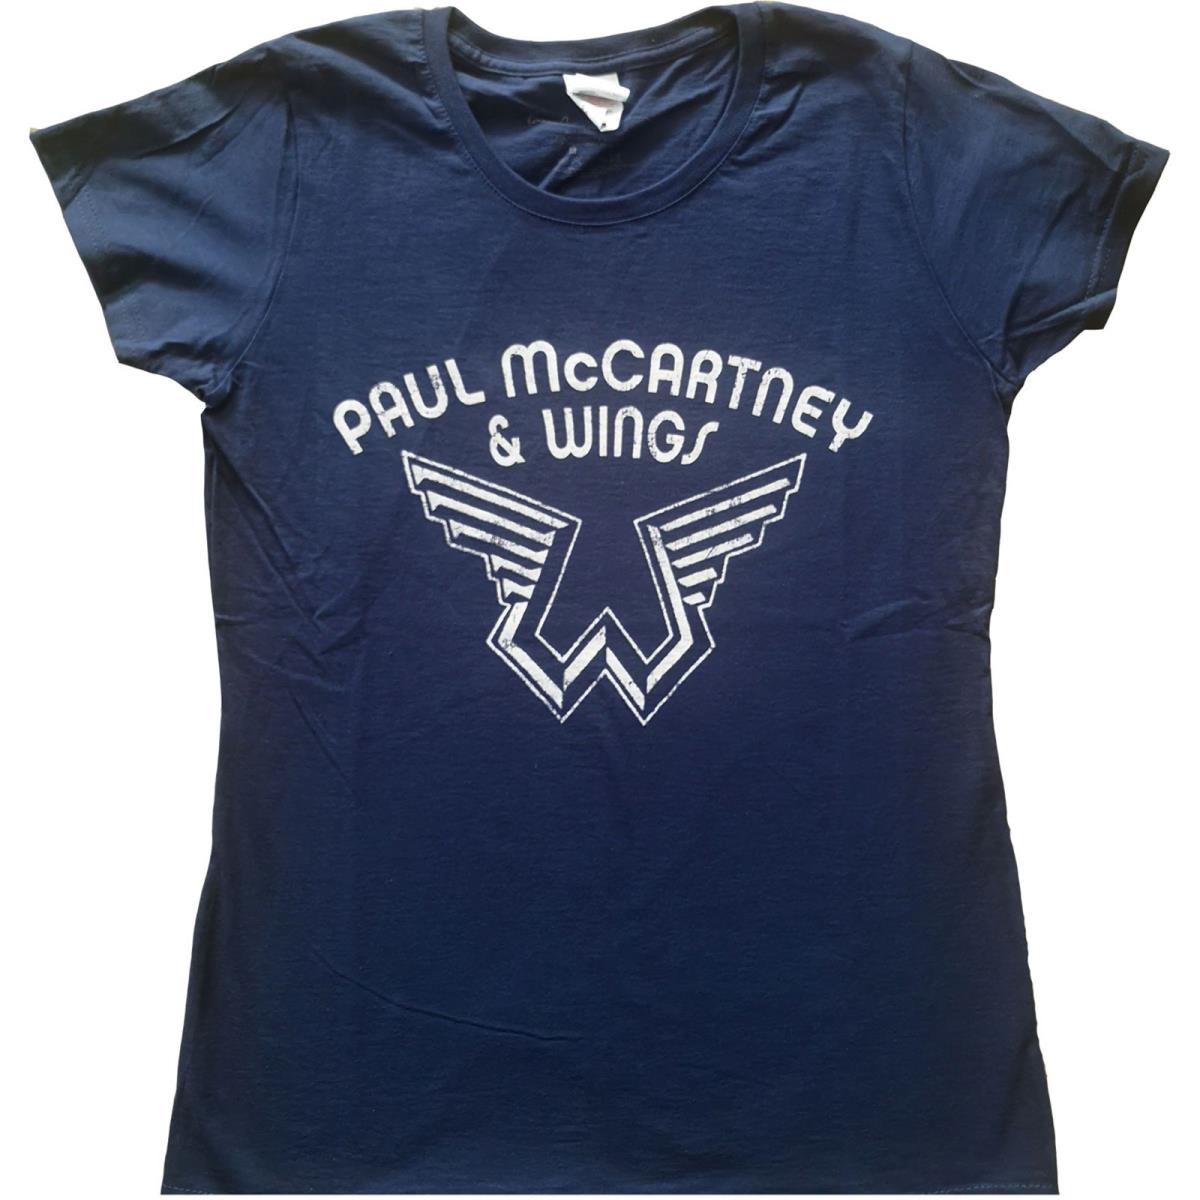 Paul McCartneyLadies T-Shirt/Wings Logo (Small)